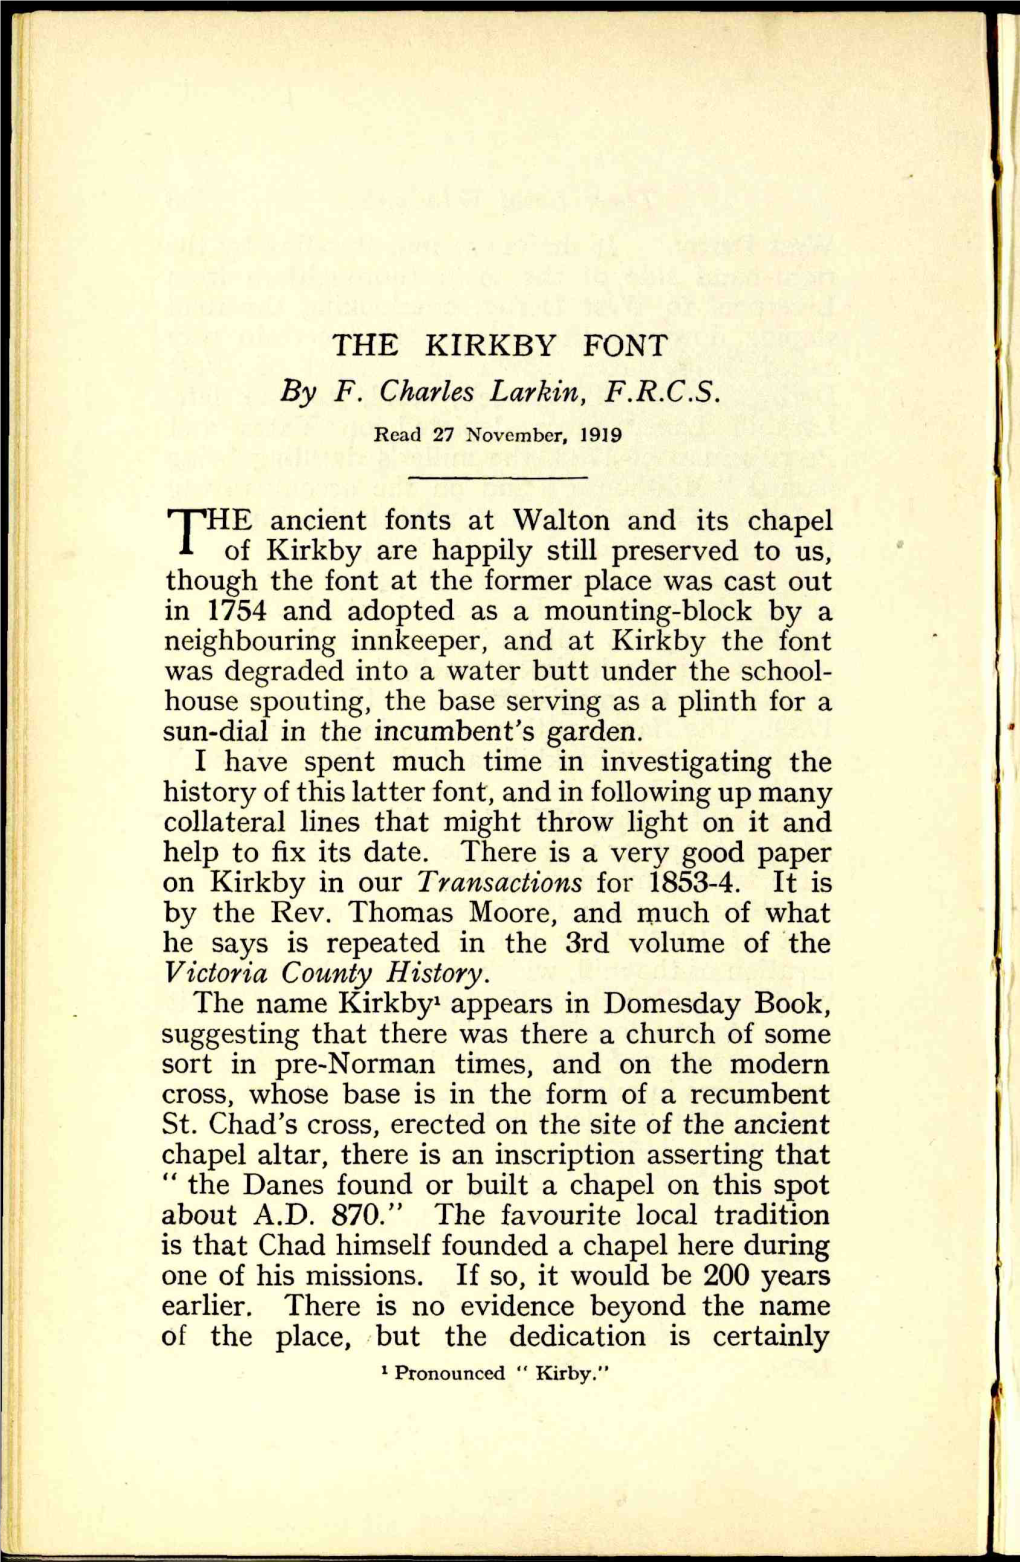 THE KIRKBY FONT by F. Charles Larkin, F.R.C.S. Read 27 November, 1919